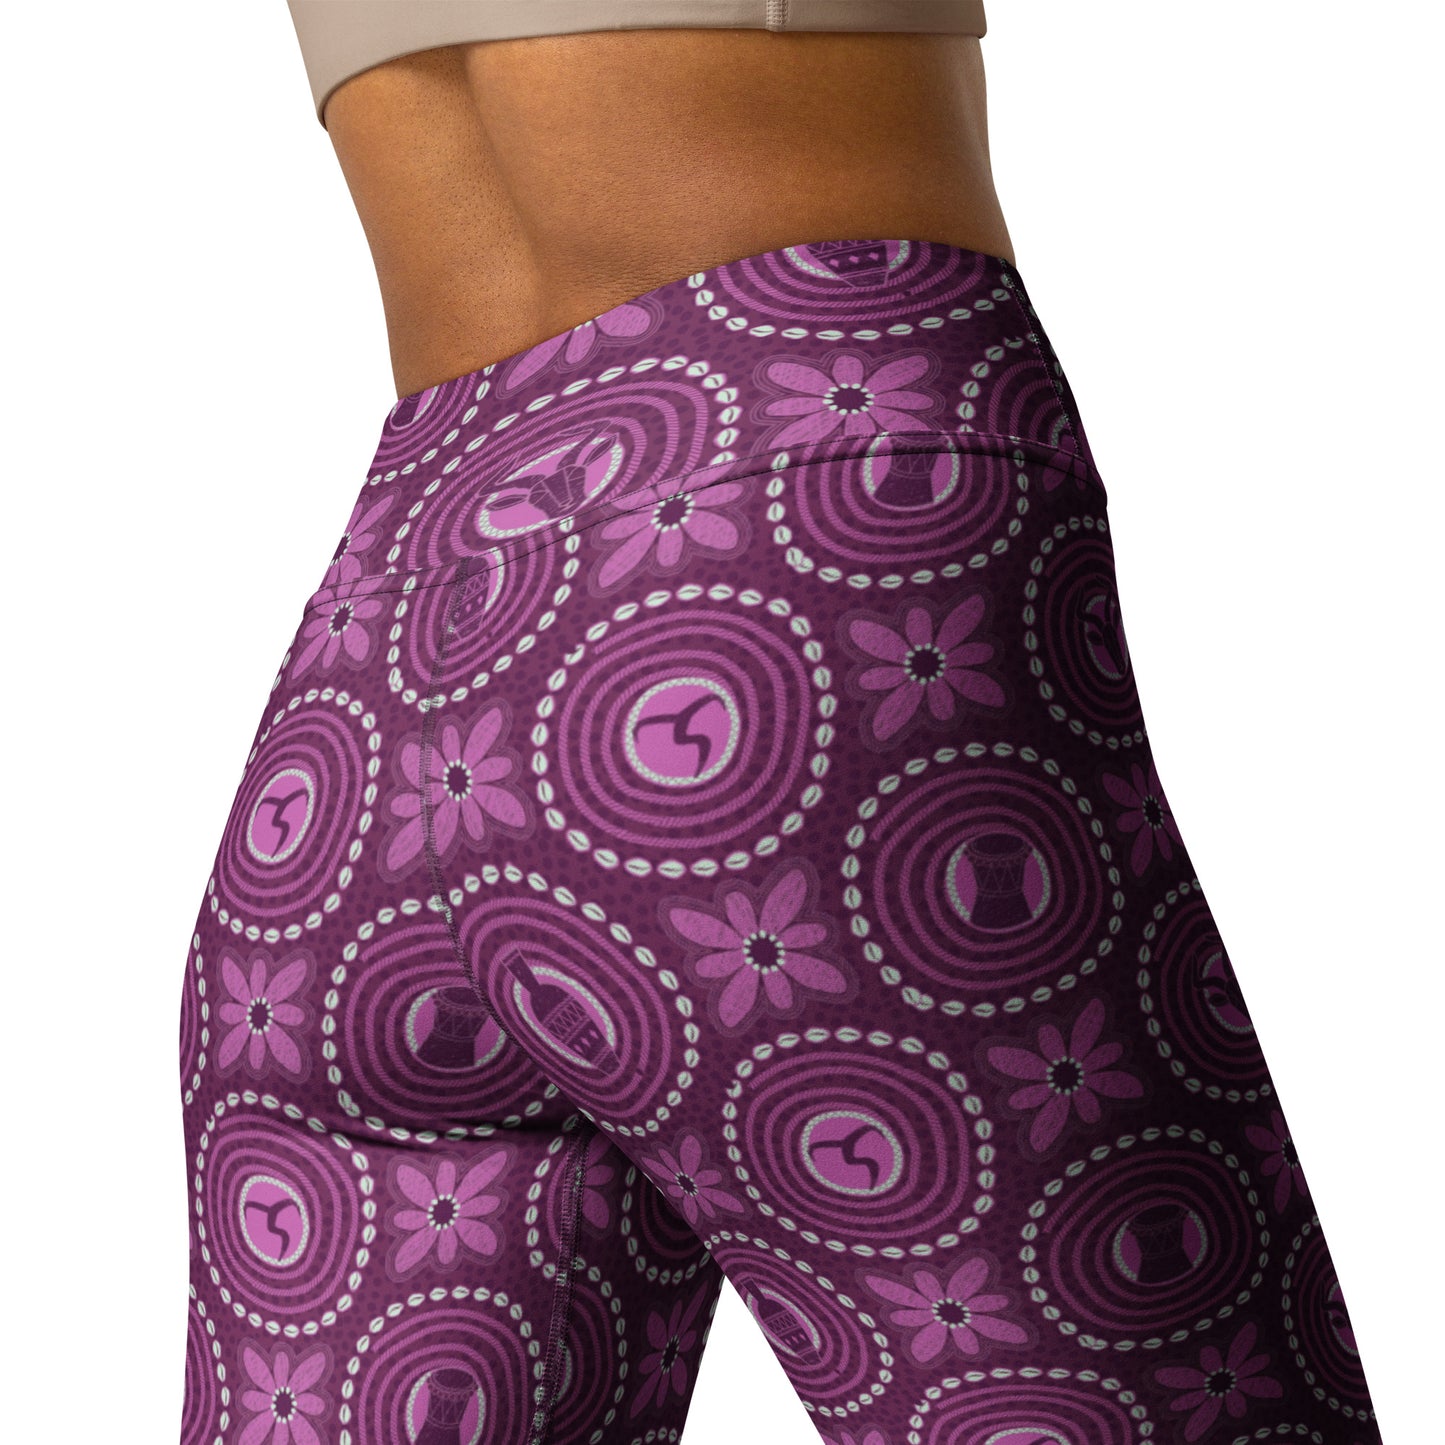 Adire Purple Yoga Leggings